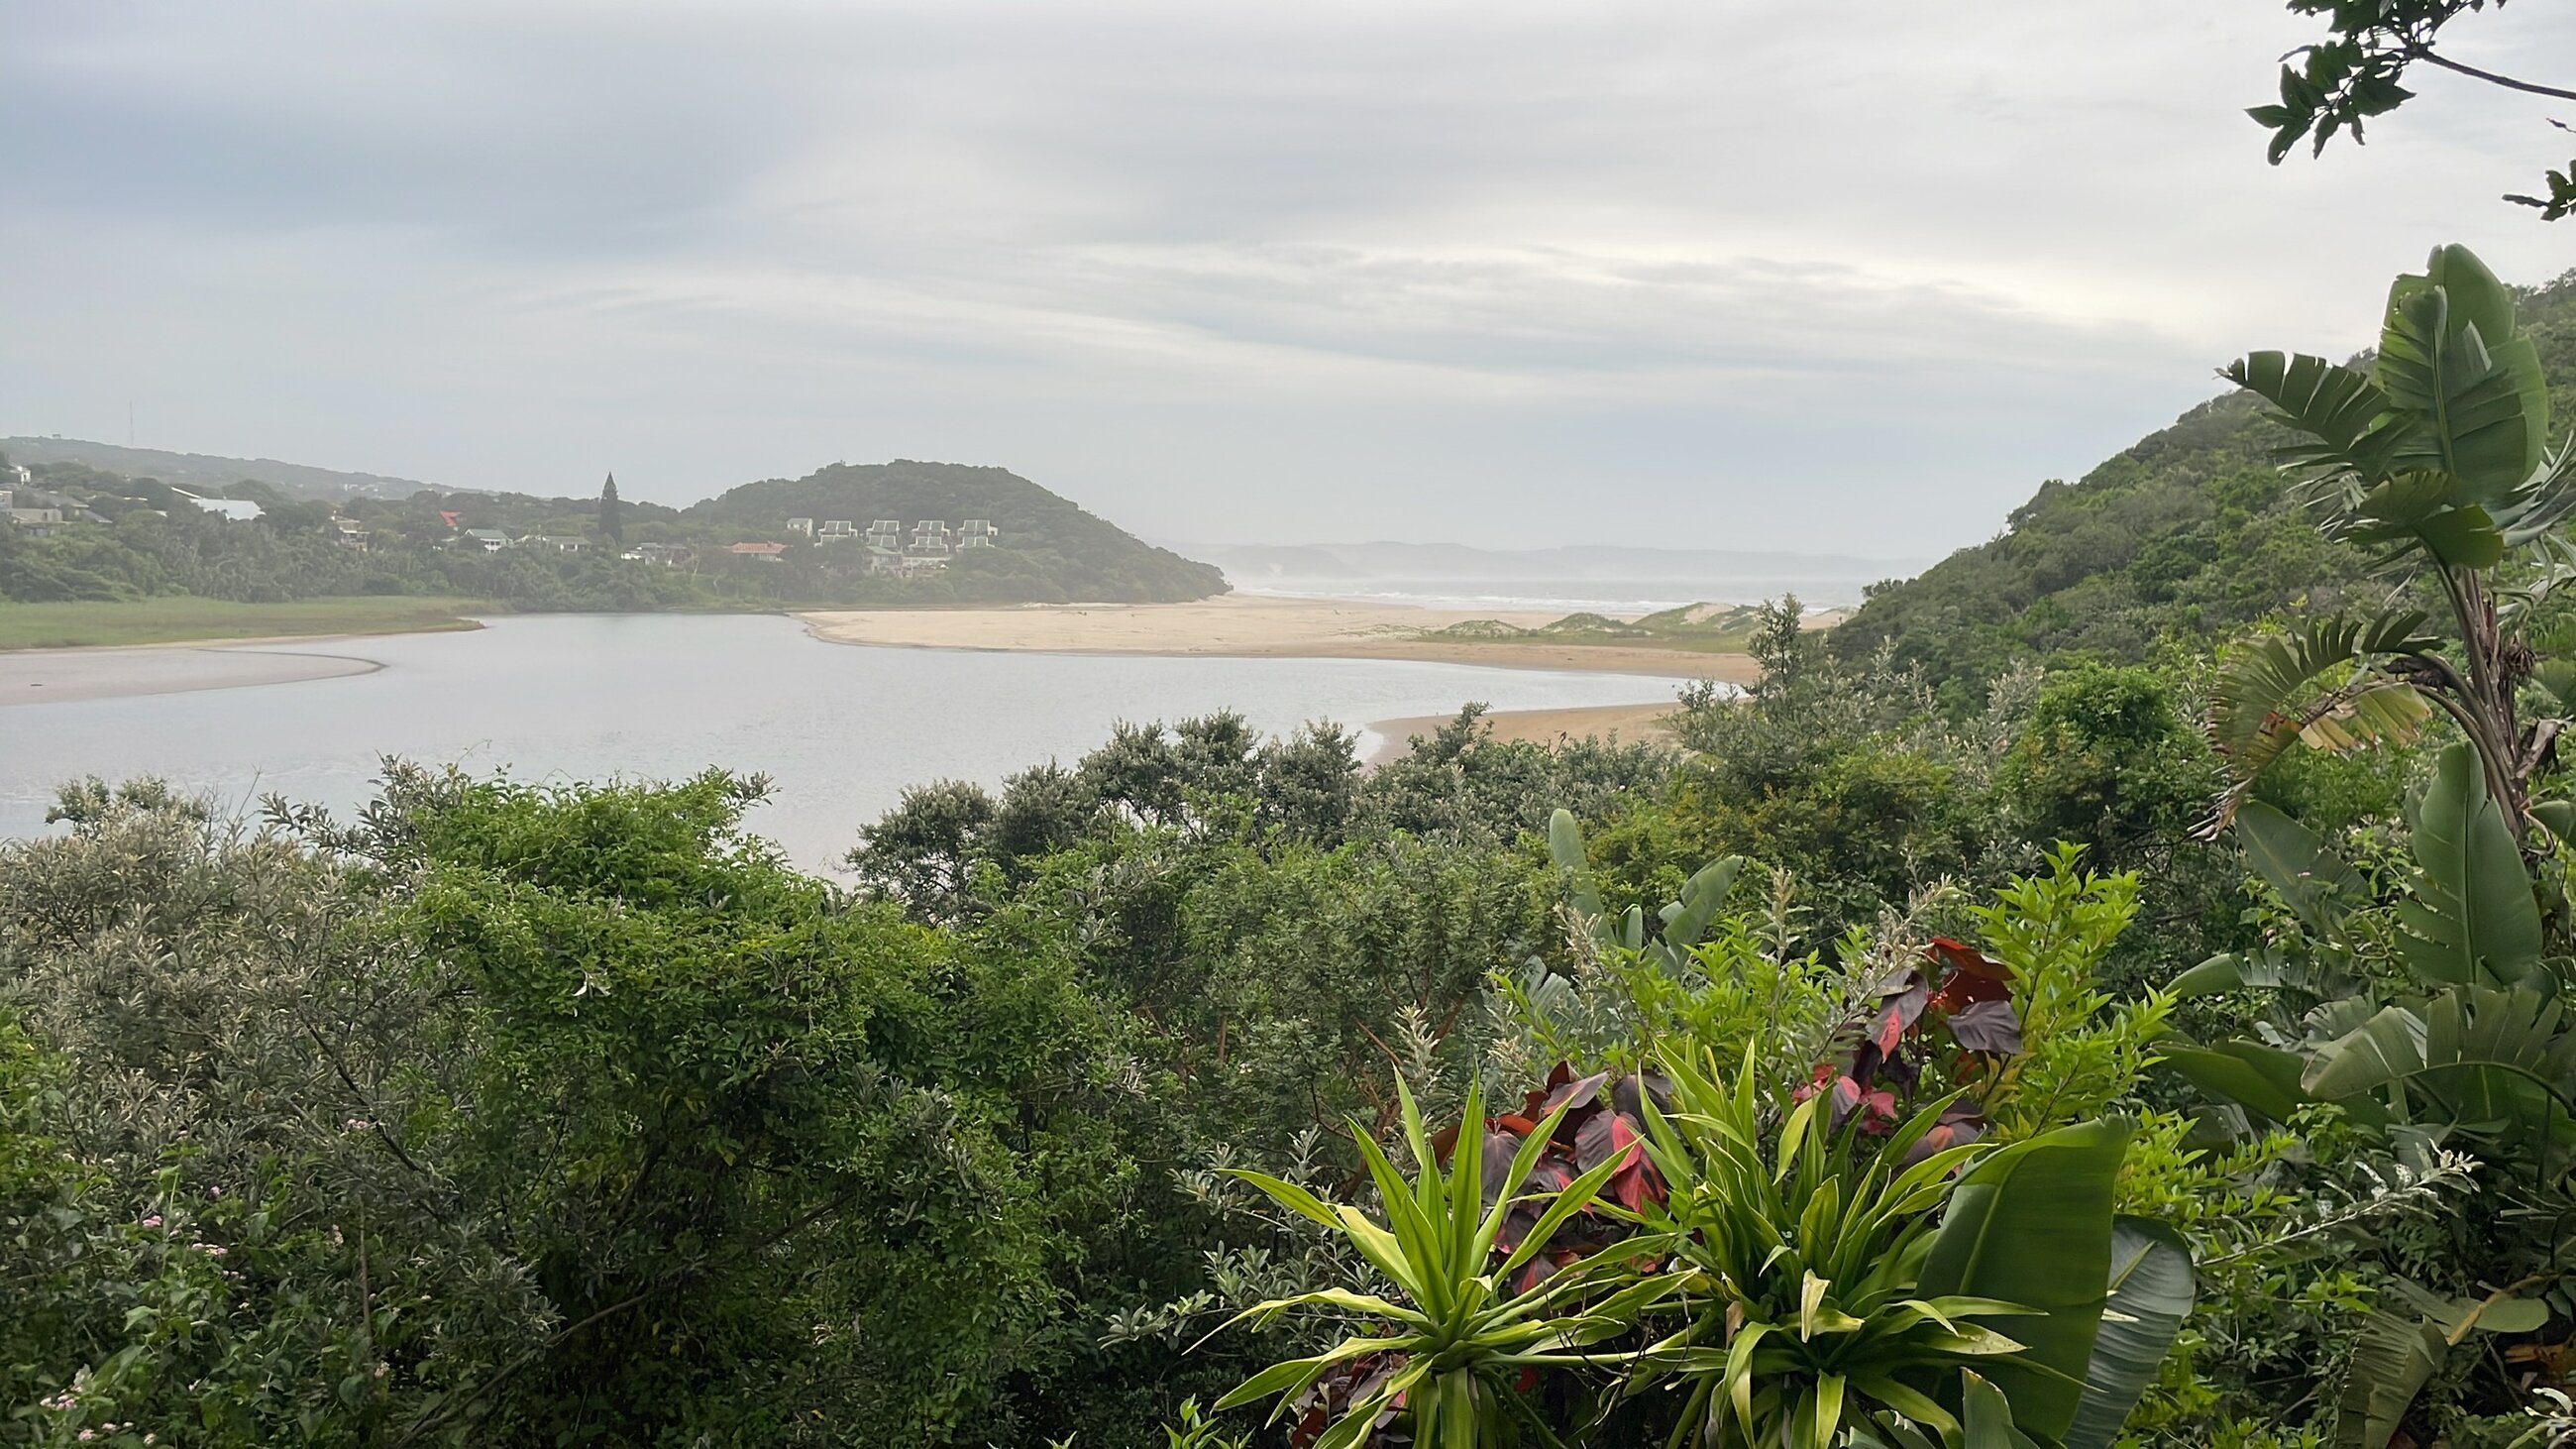 View of Chintsa Beach from the accommodation.